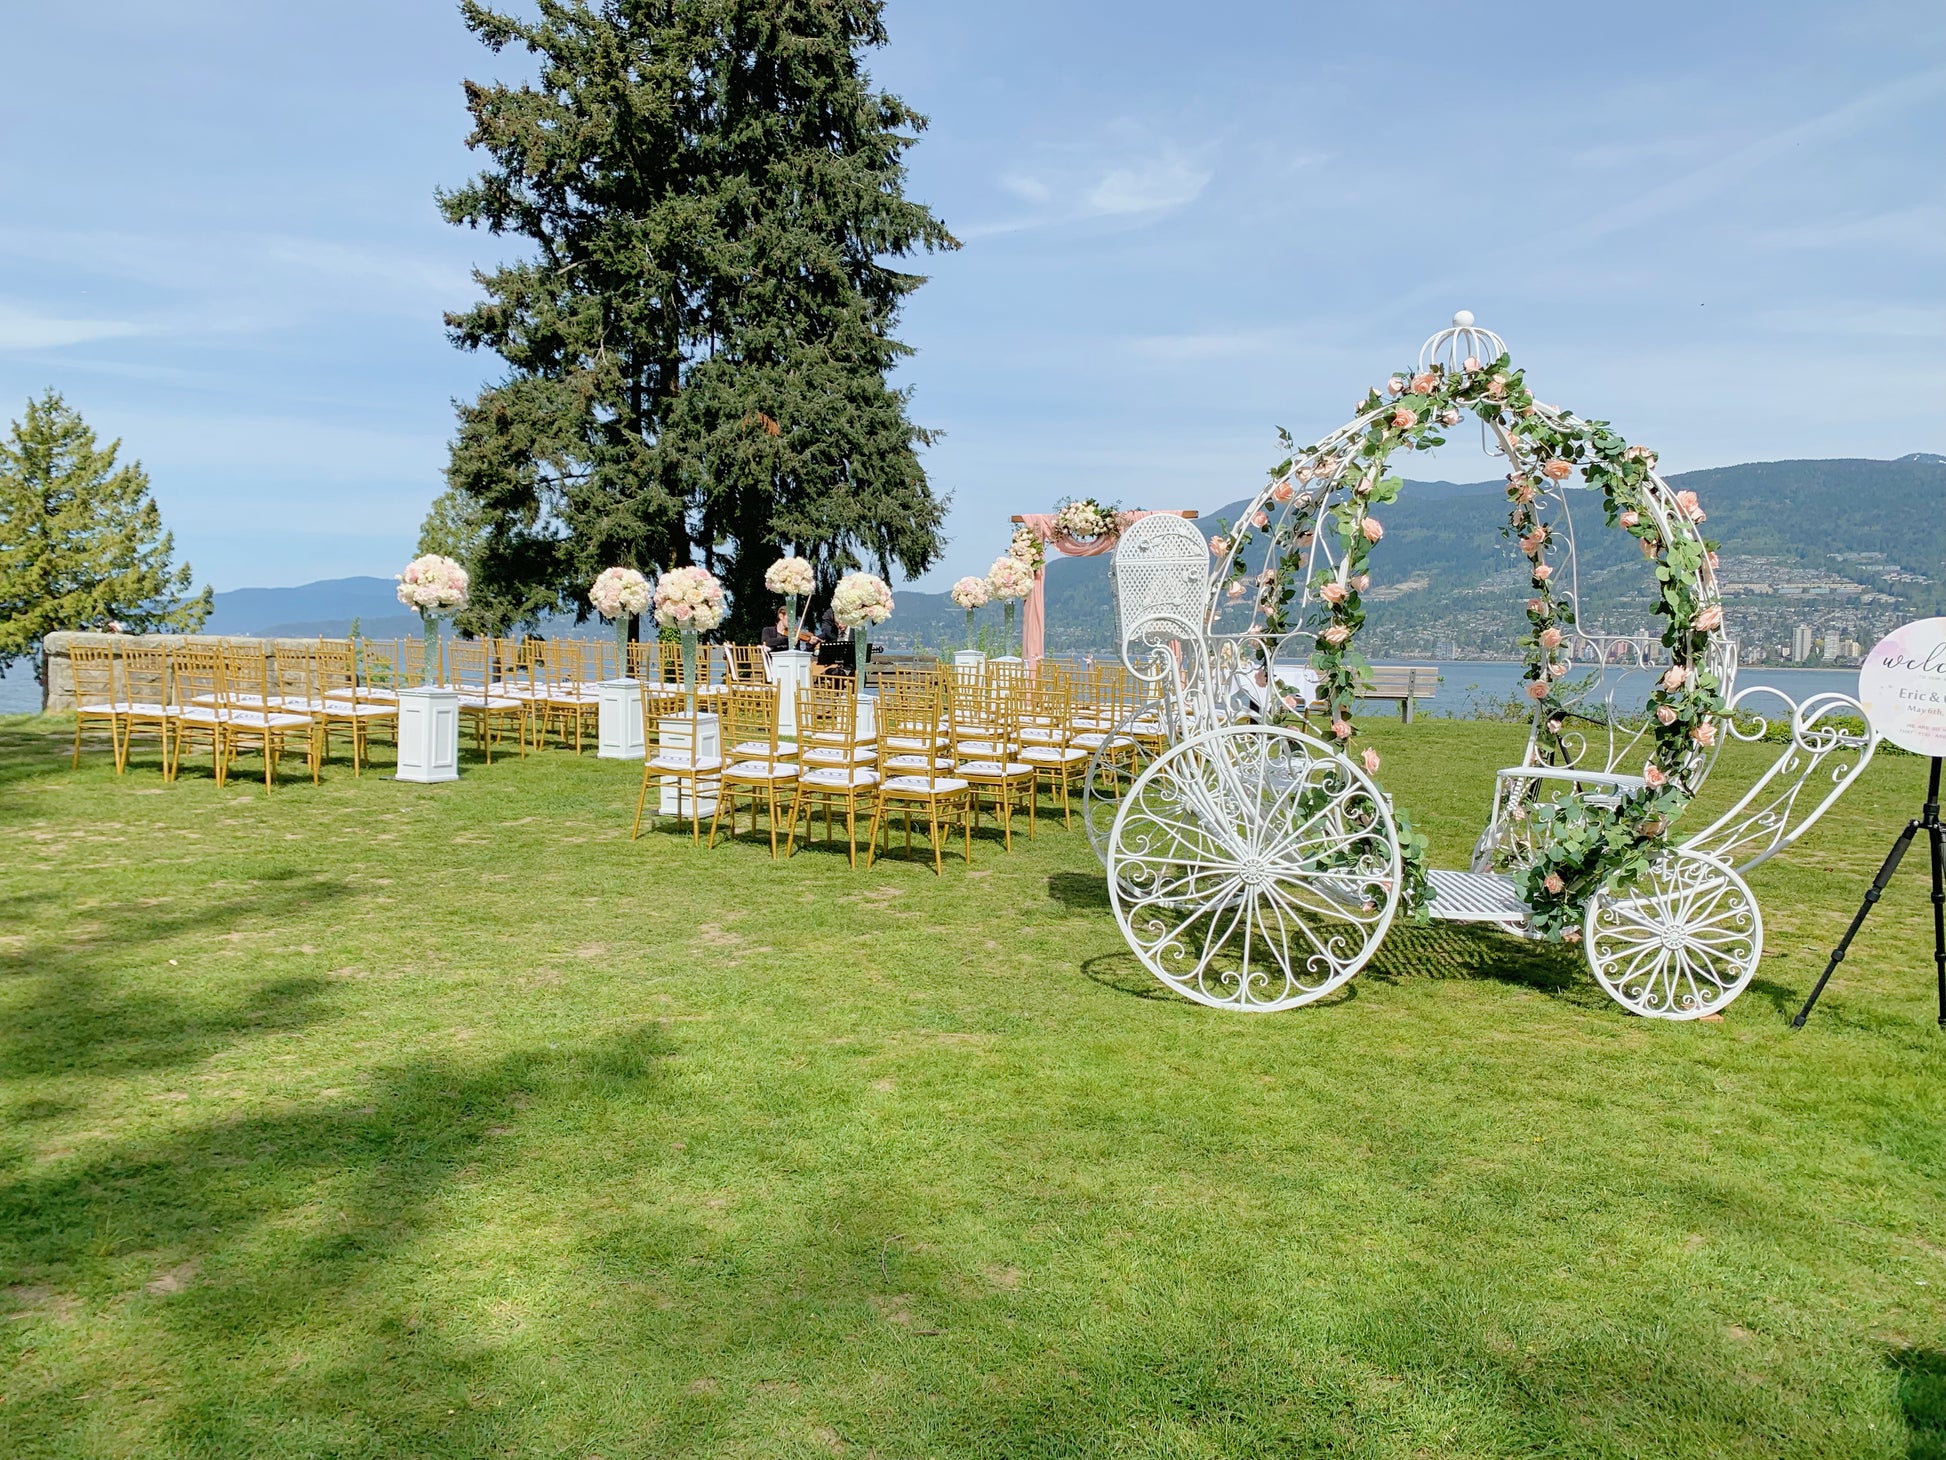 Cinderella Carriage / Dreamy Wedding Carriage /  Pumpkin Carriage - Fino Decor